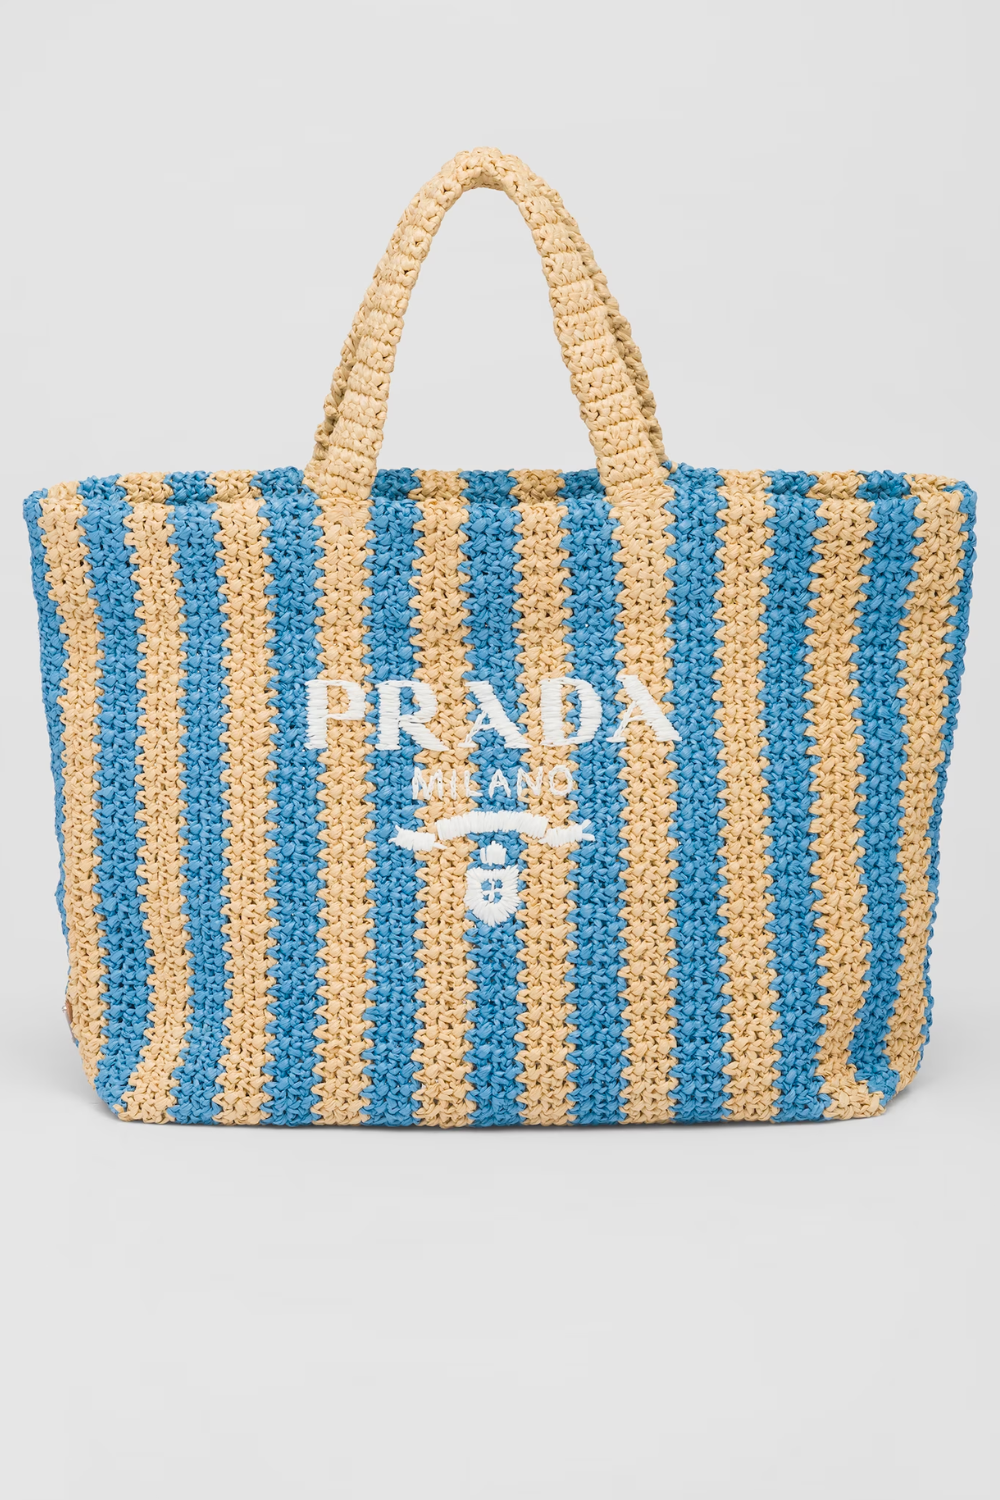 Prada-Beach-Bag